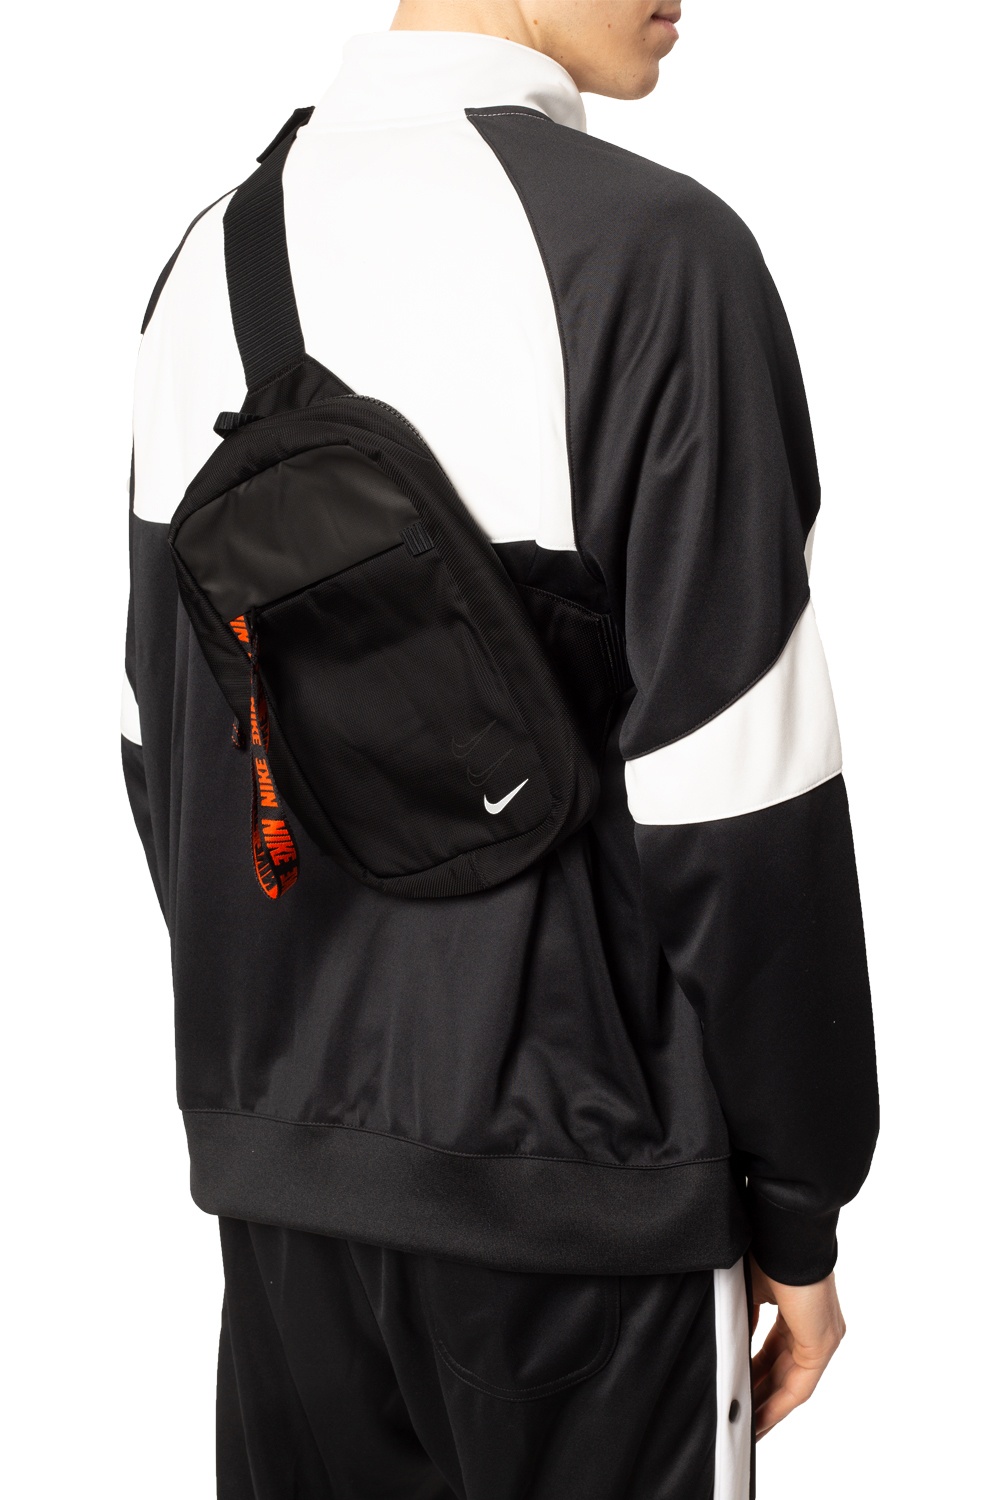 Nike One-shoulder backpack, Men's Bags